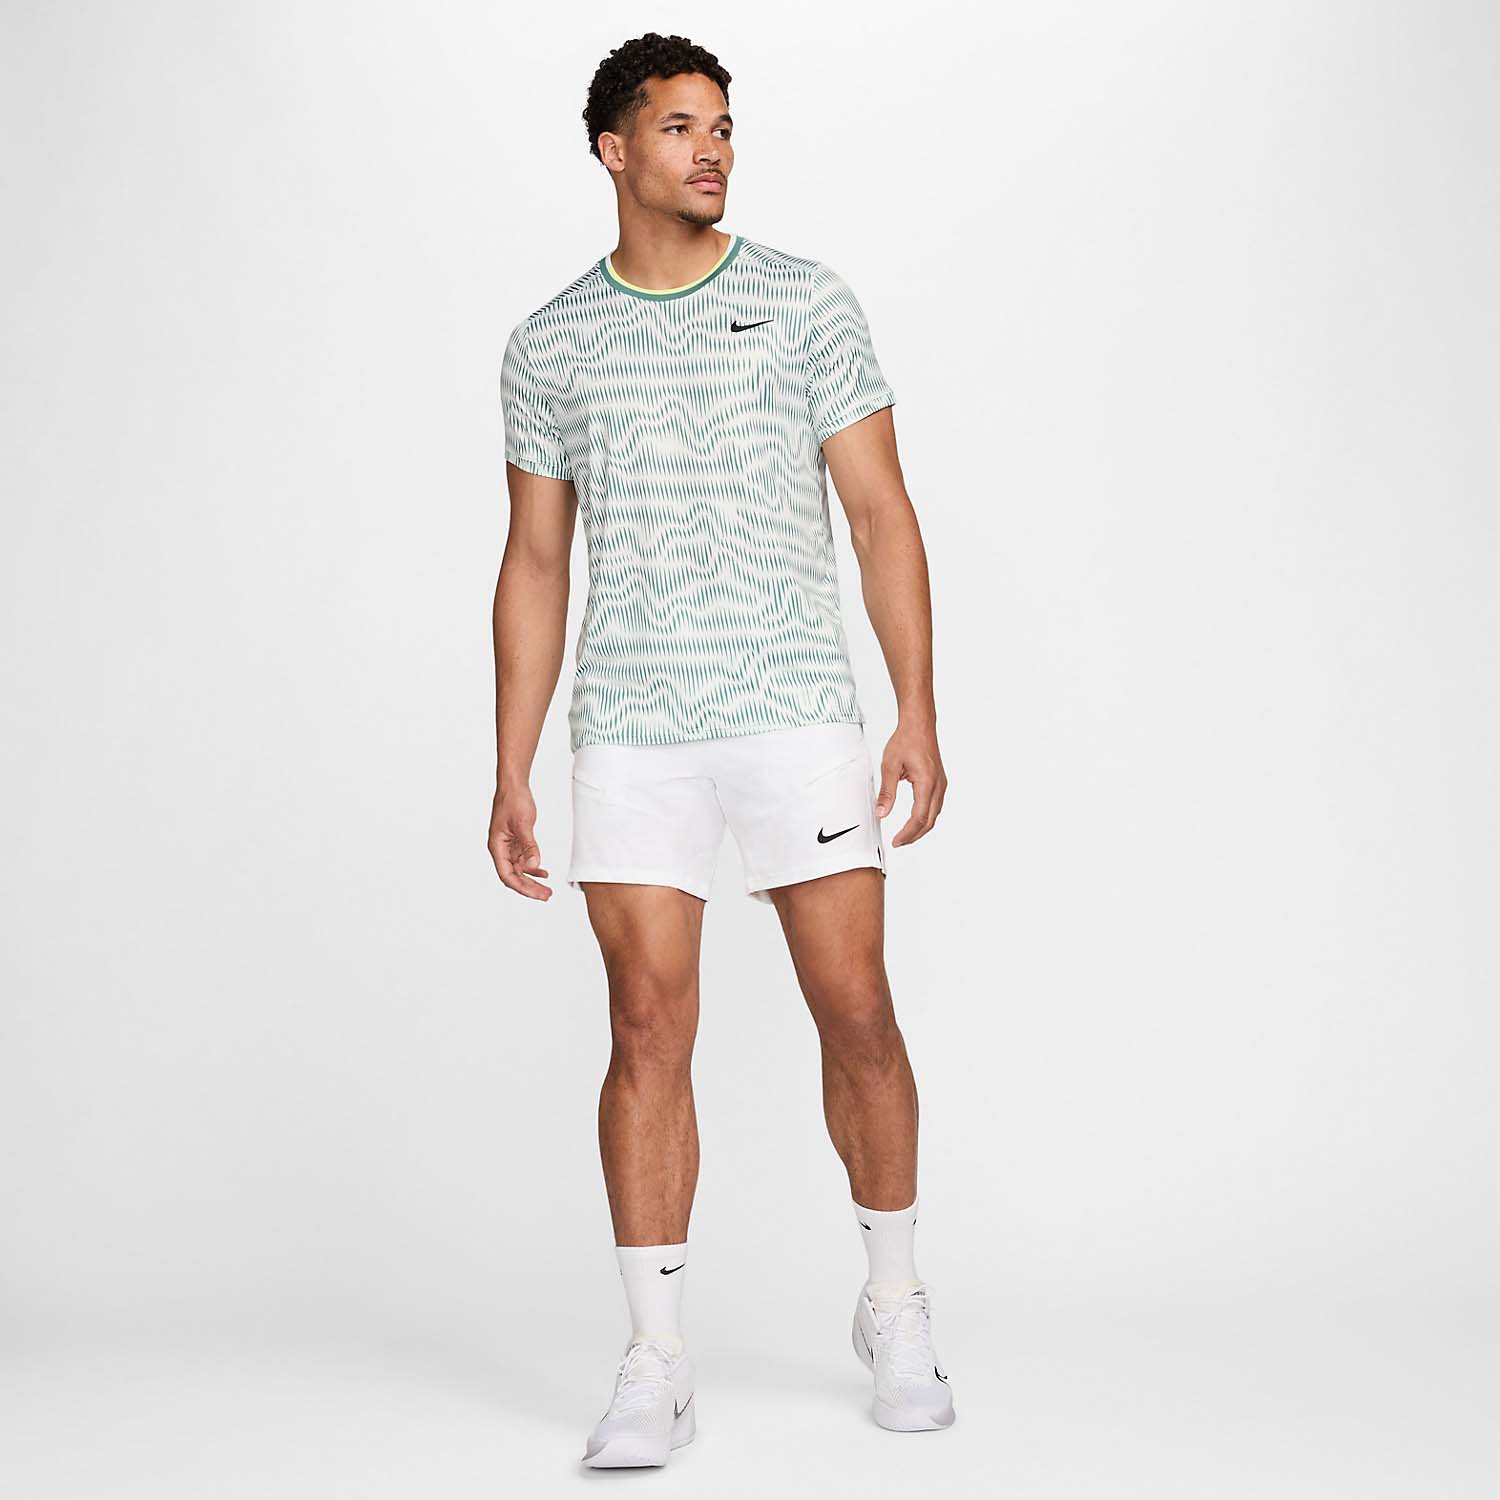 Nike Dri-FIT Advantage T-Shirt - Barely Green/Bicostal/Black